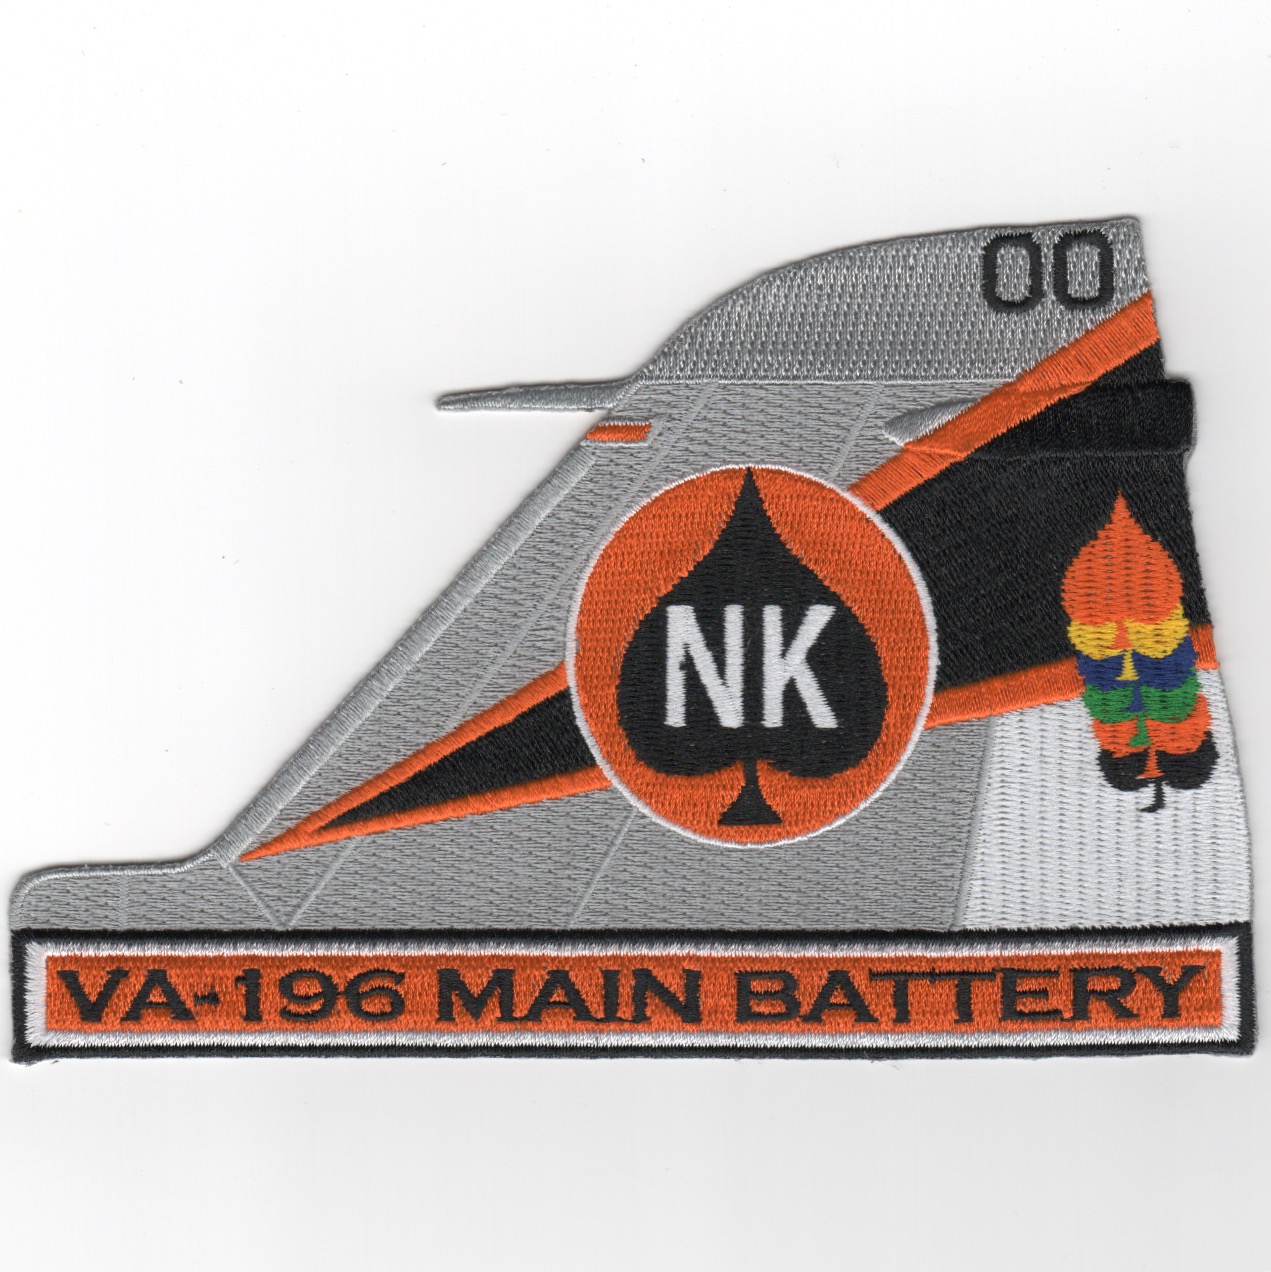 VA-196 A-6 'NK' Tailfin Patch